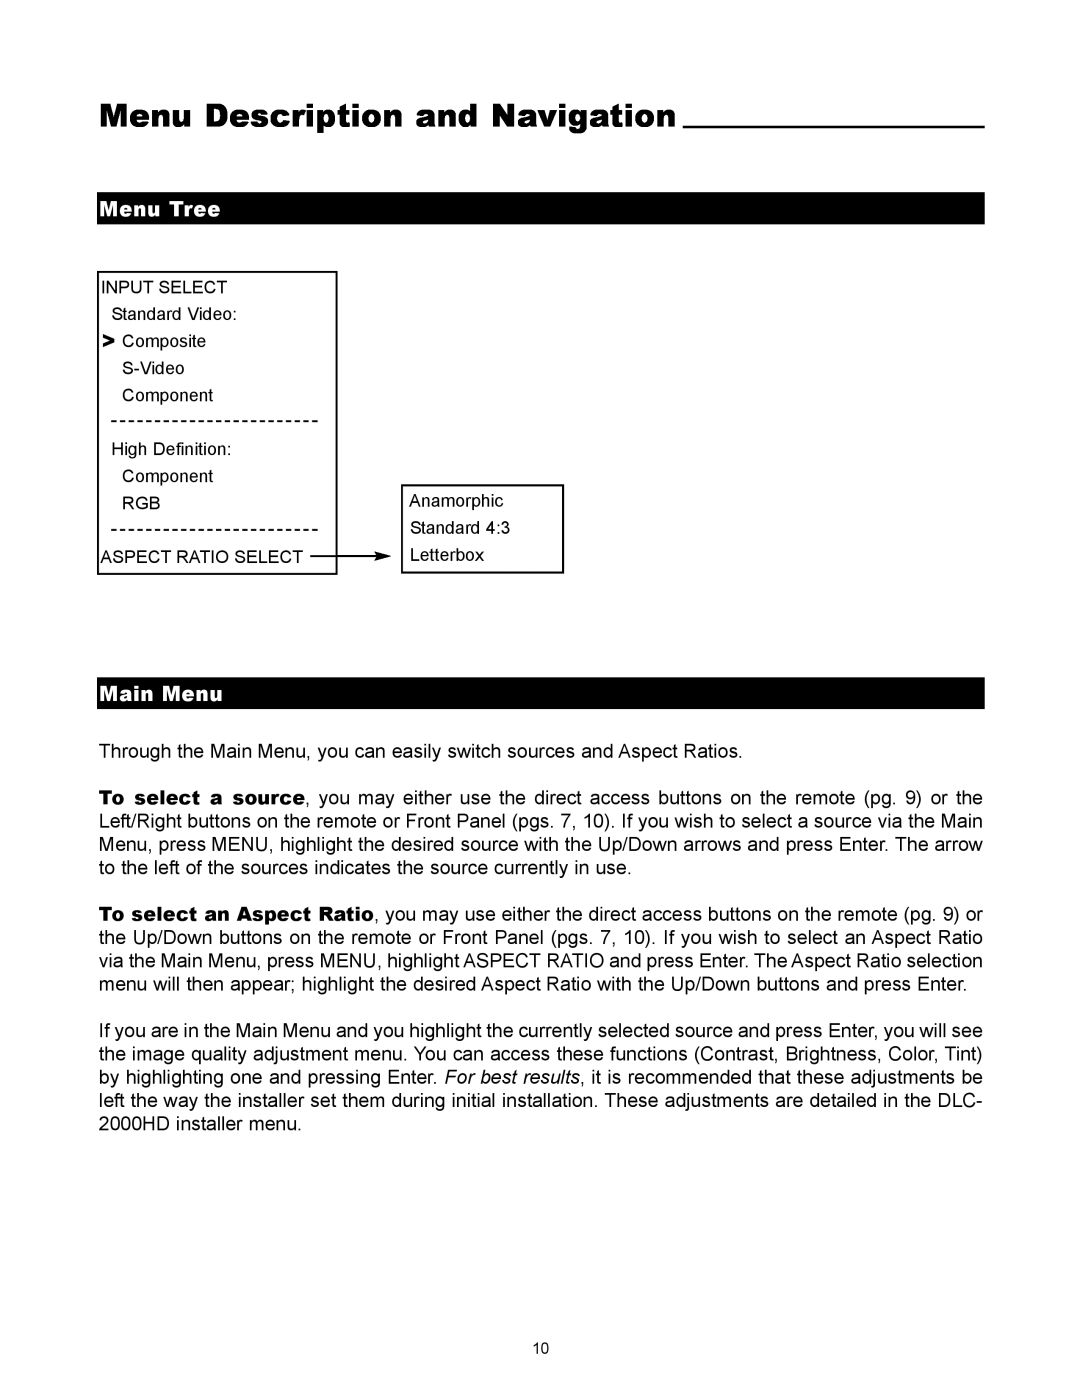 Runco DLC-2000HD user manual Menu Description and Navigation, Menu Tree, Main Menu 